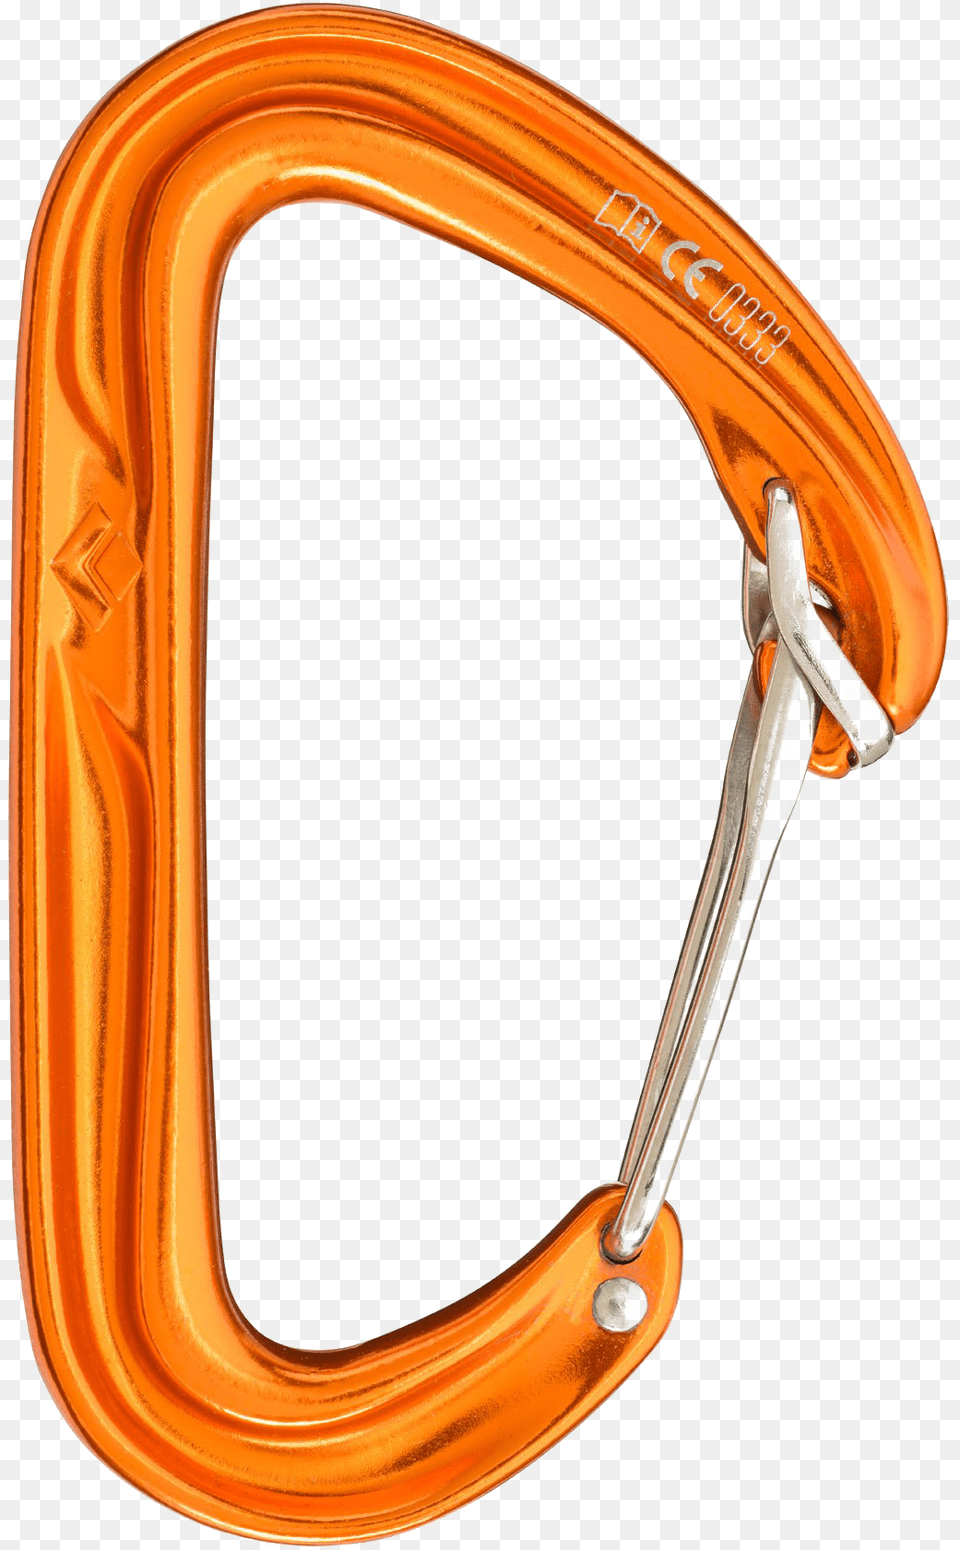 Orange Carabiner Transparent Background Black Diamond Hoodwire Carabiner, Electronics, Hardware, Device Png Image